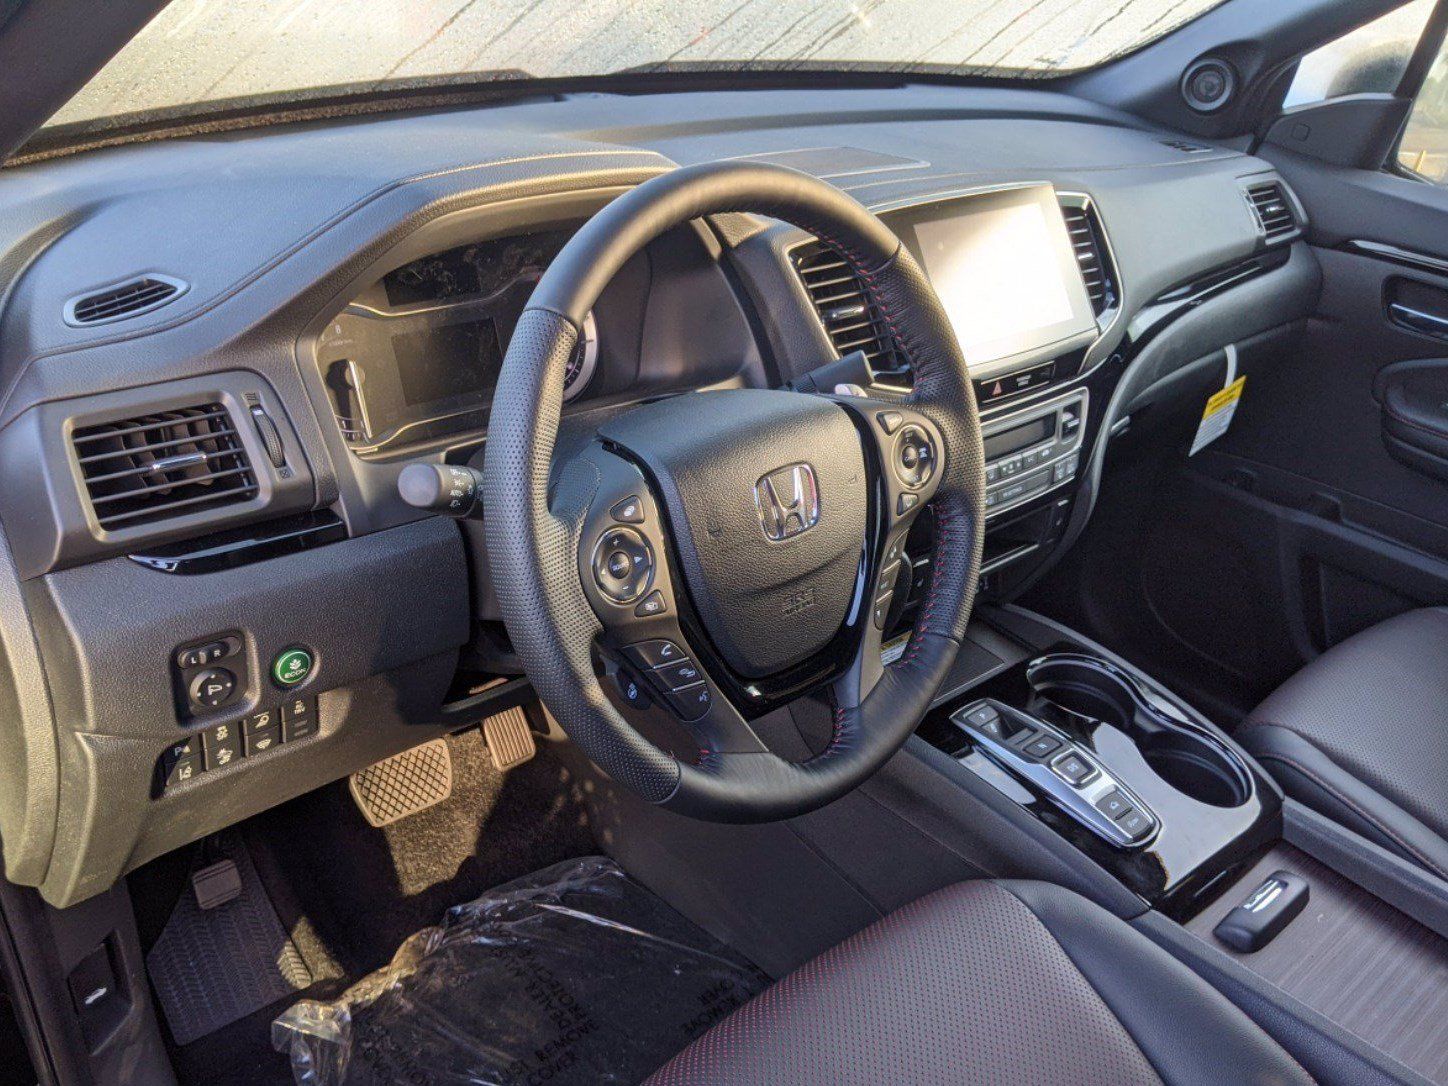 Honda Ridgeline Black Edition steering wheel